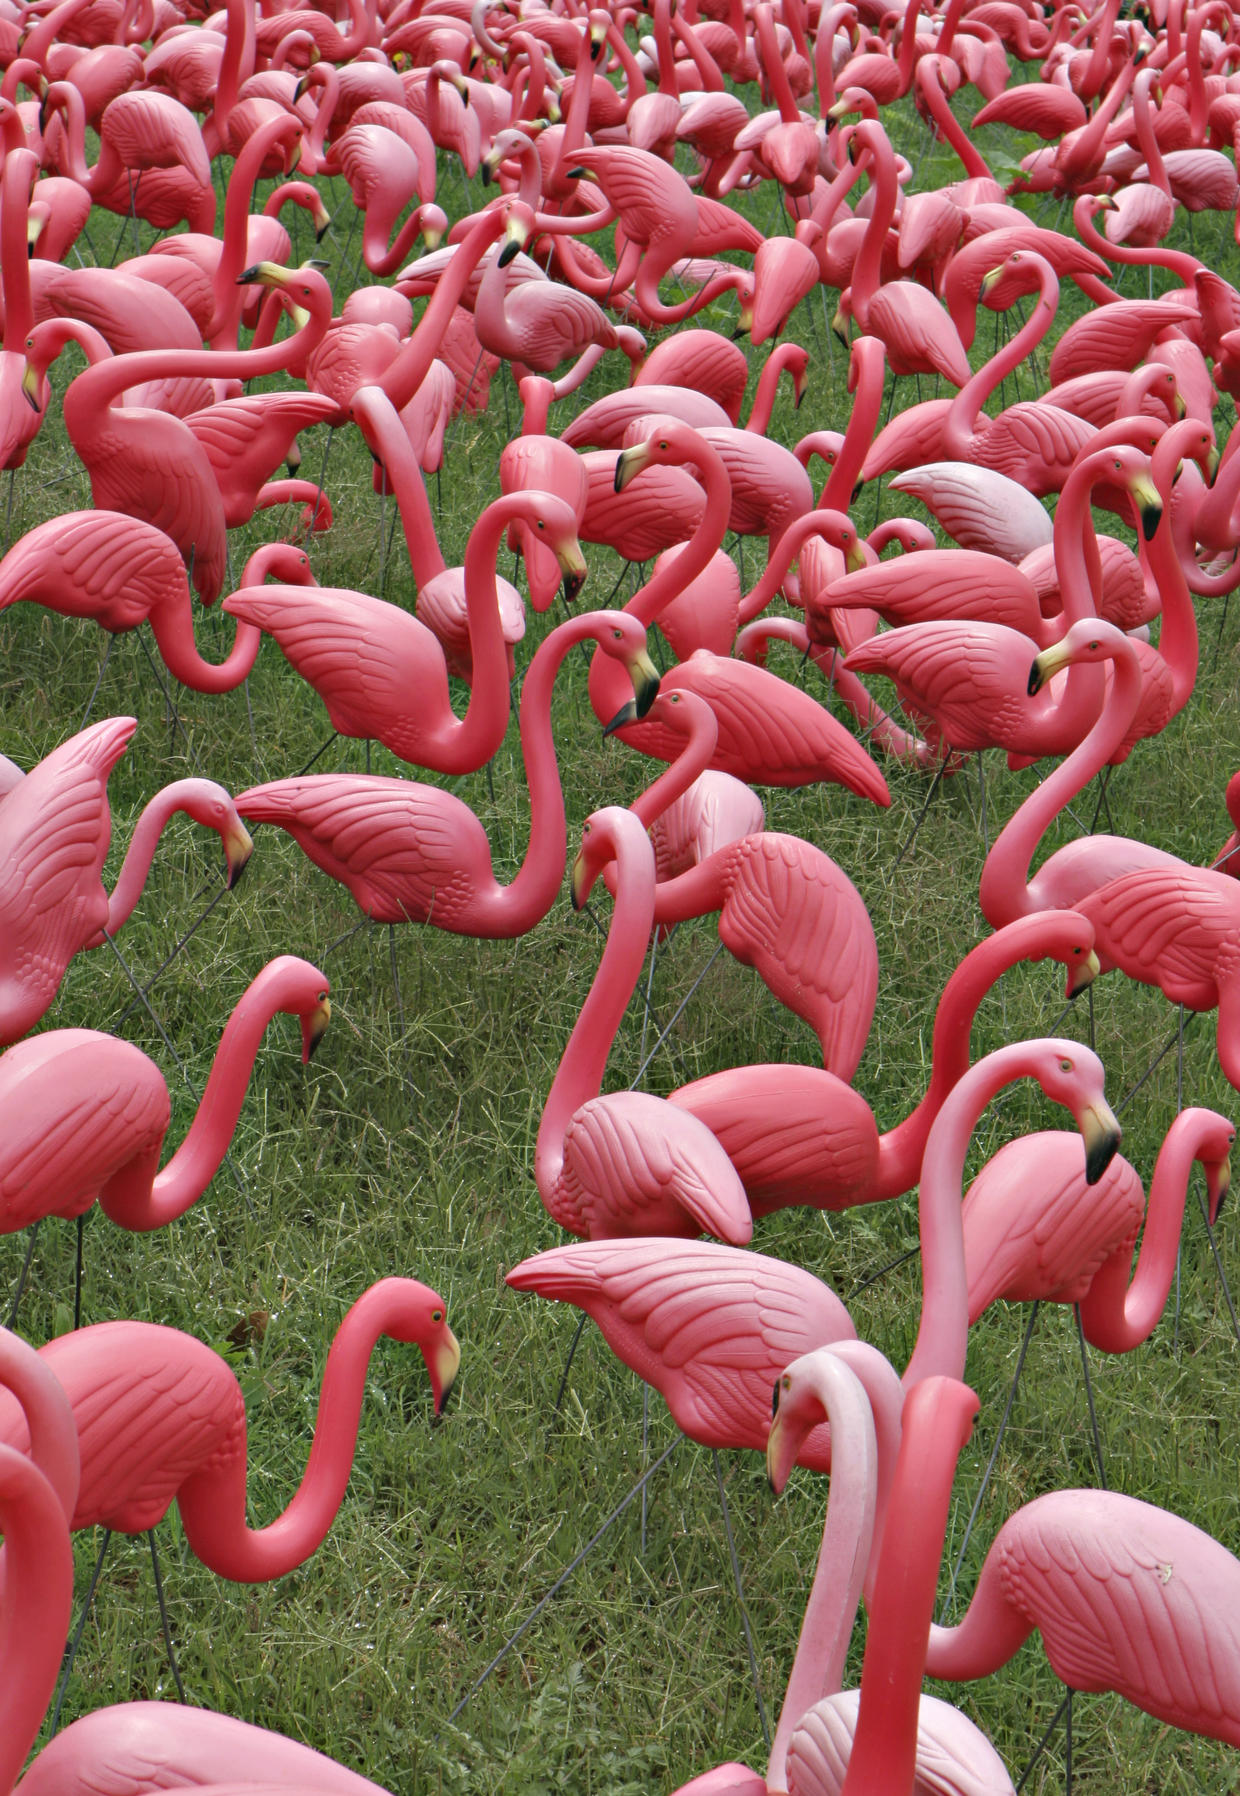 pink flamingo lawn